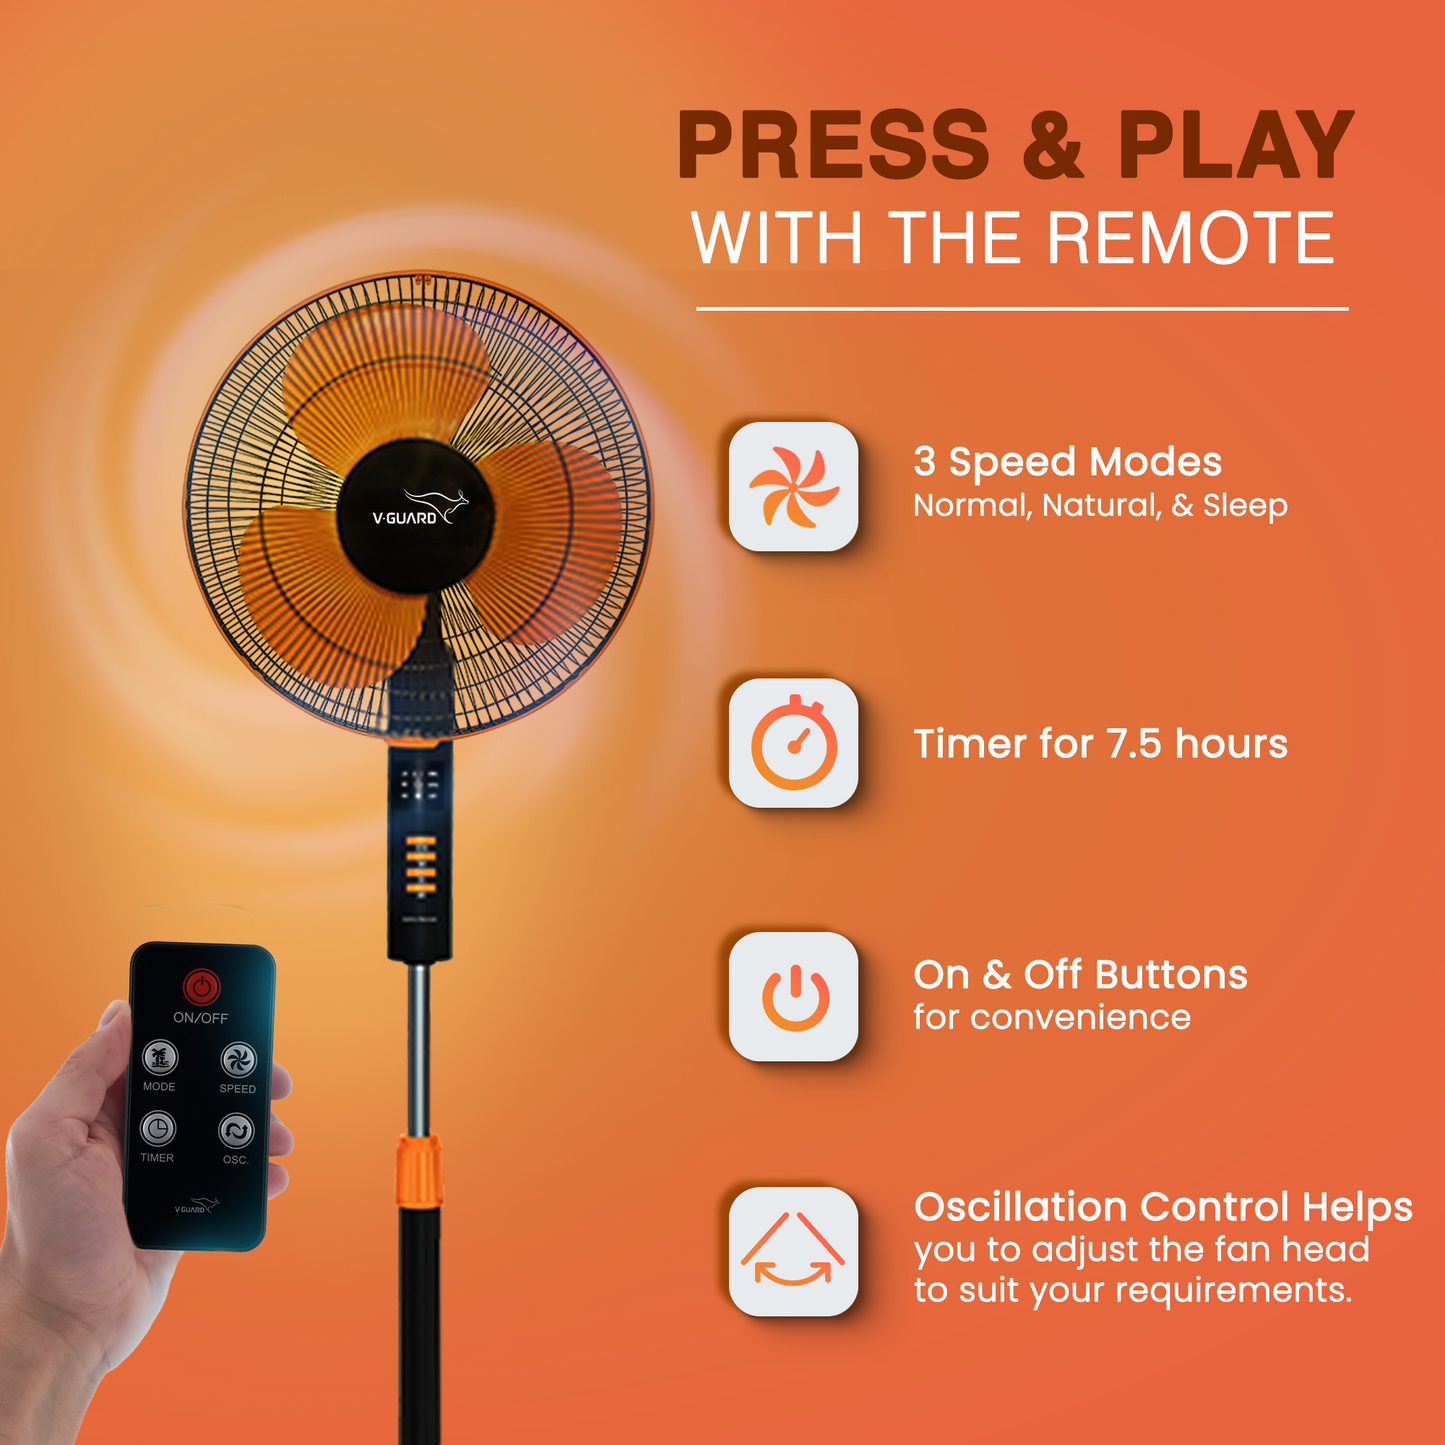 Esfera Pedestal Fan Remote Control, In-built 7.5 Hour Timer Functionality, 40 cm, Orange Black